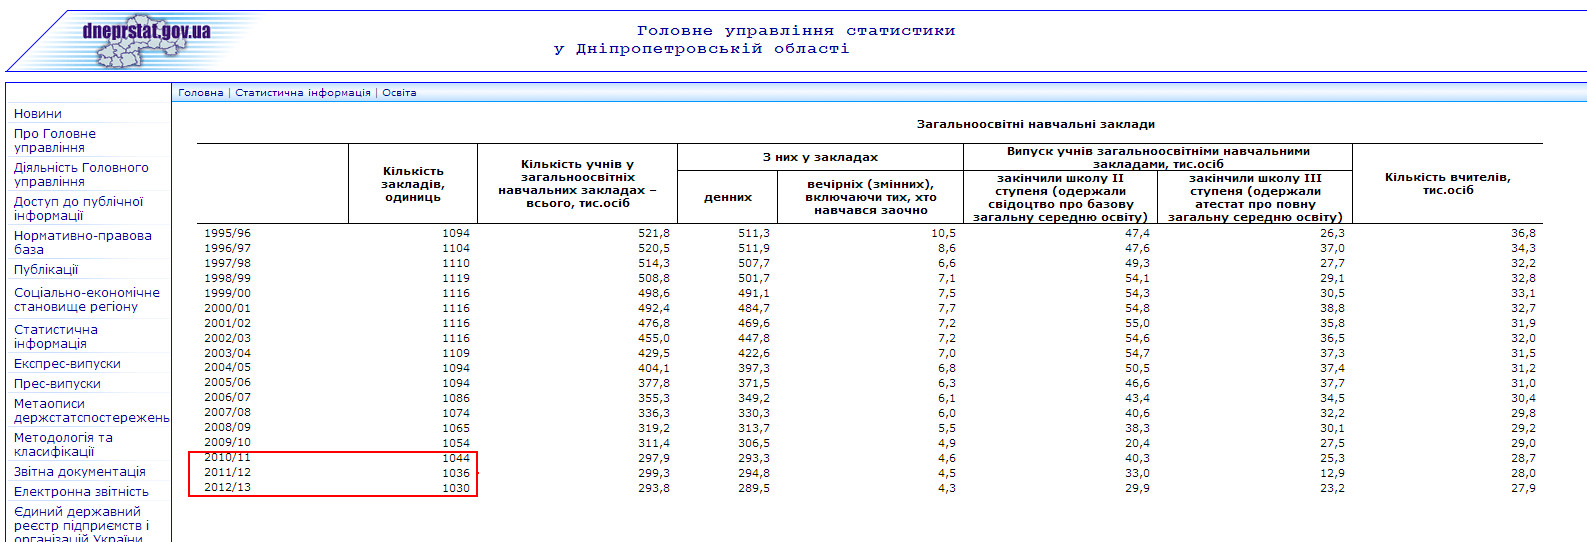 http://www.dneprstat.gov.ua/statinfo/o/o2.htm